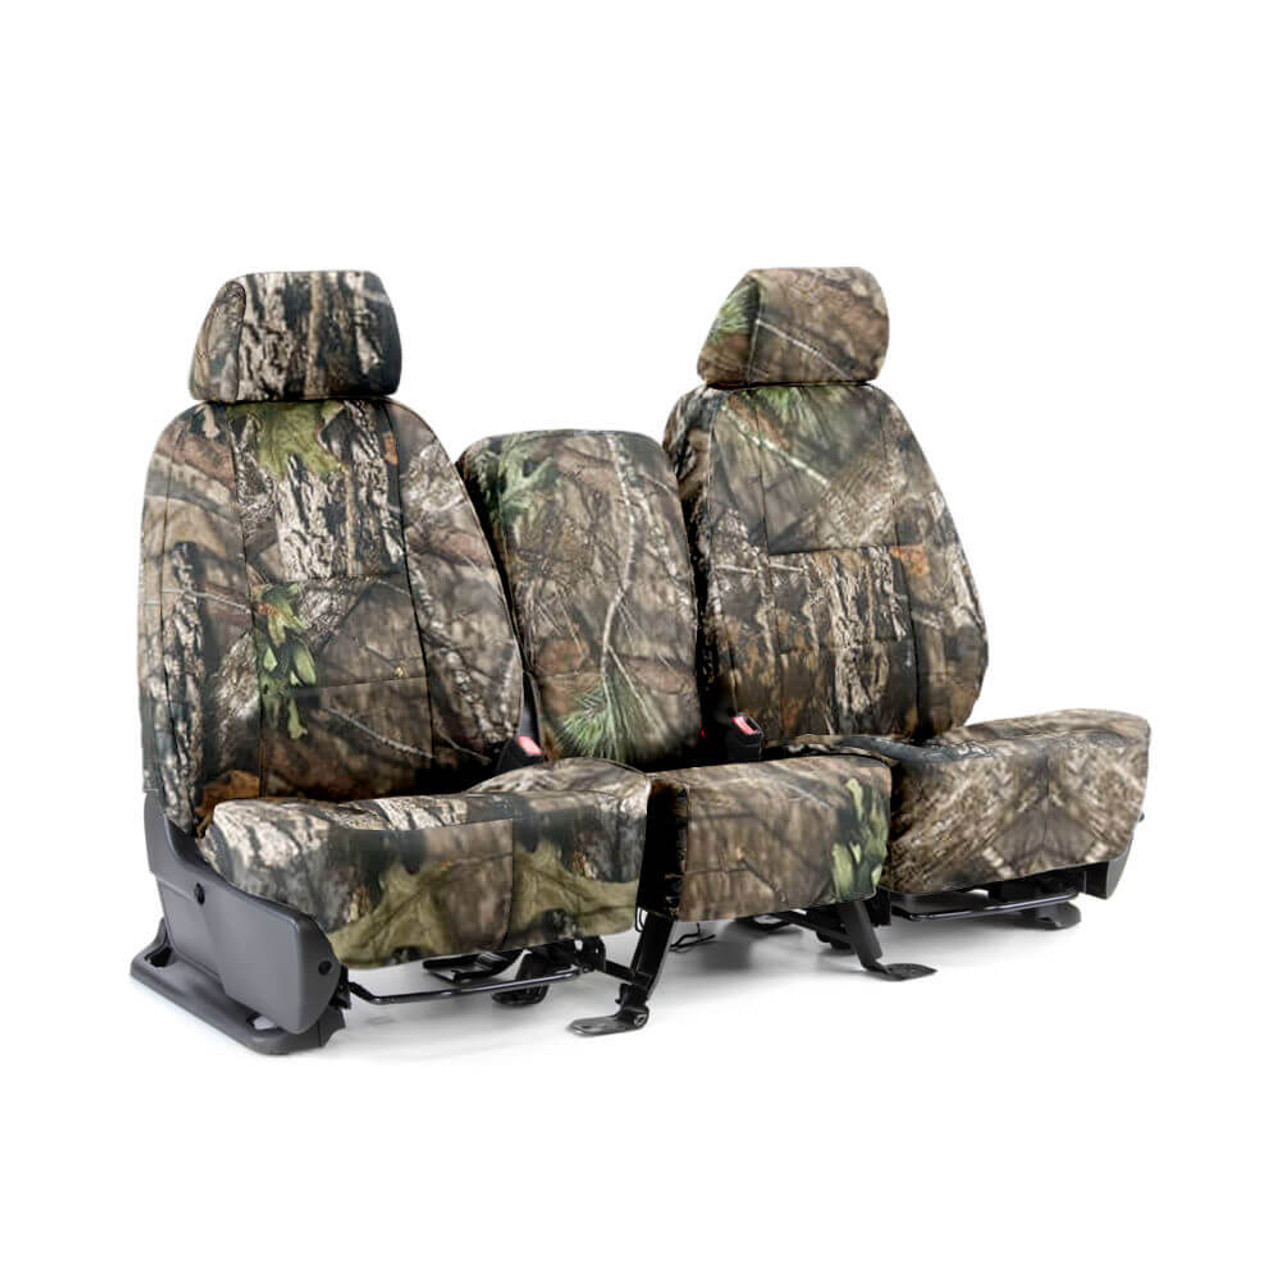 Mossy Oak Seat Covers  Stunningly Realistic Camoflauge